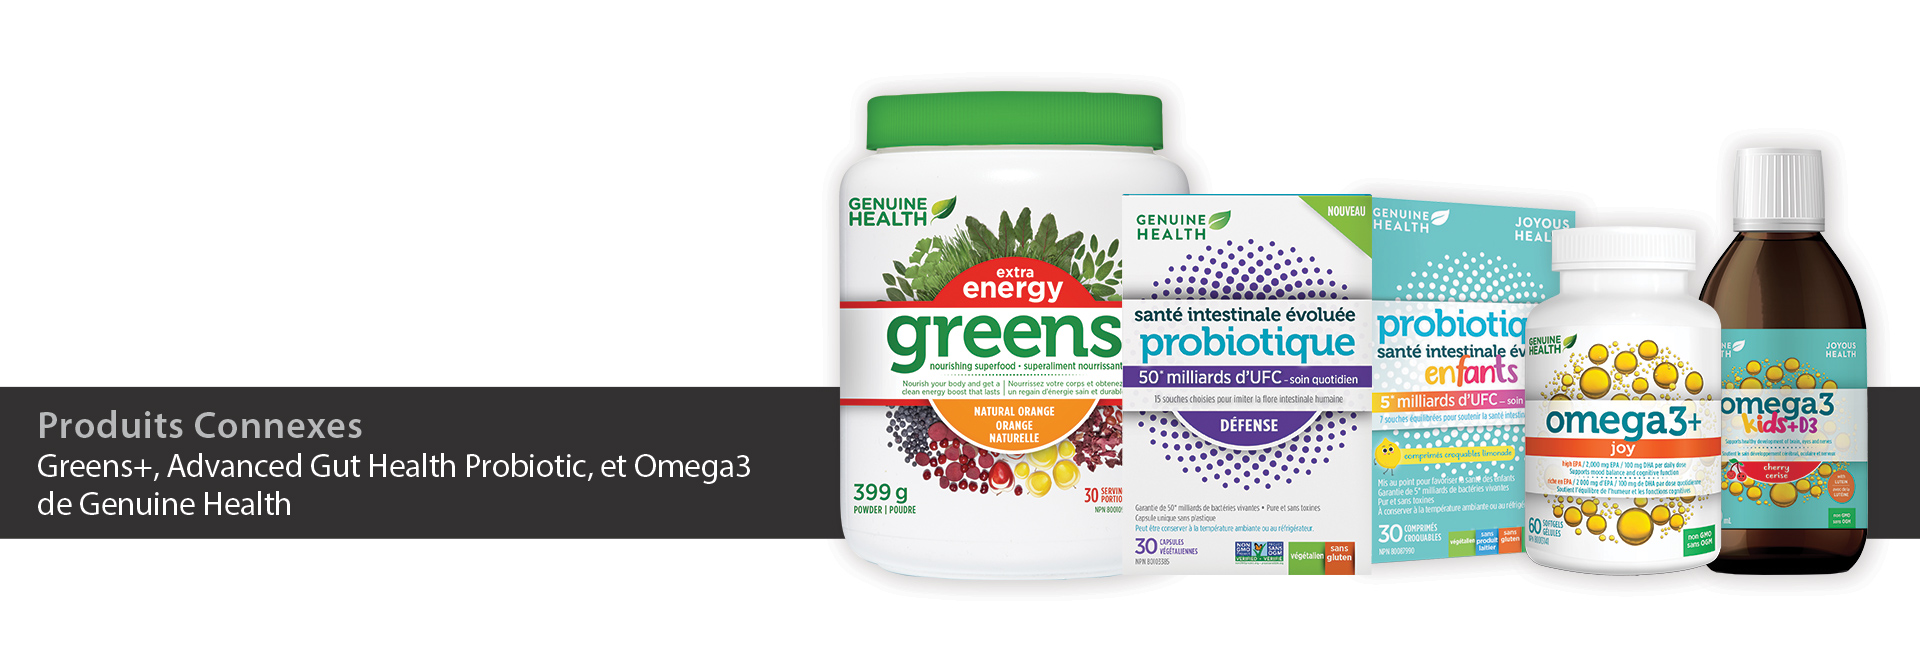 Greens+, Advanced Gut Health Probiotic, et Omega3 de Genuine Health